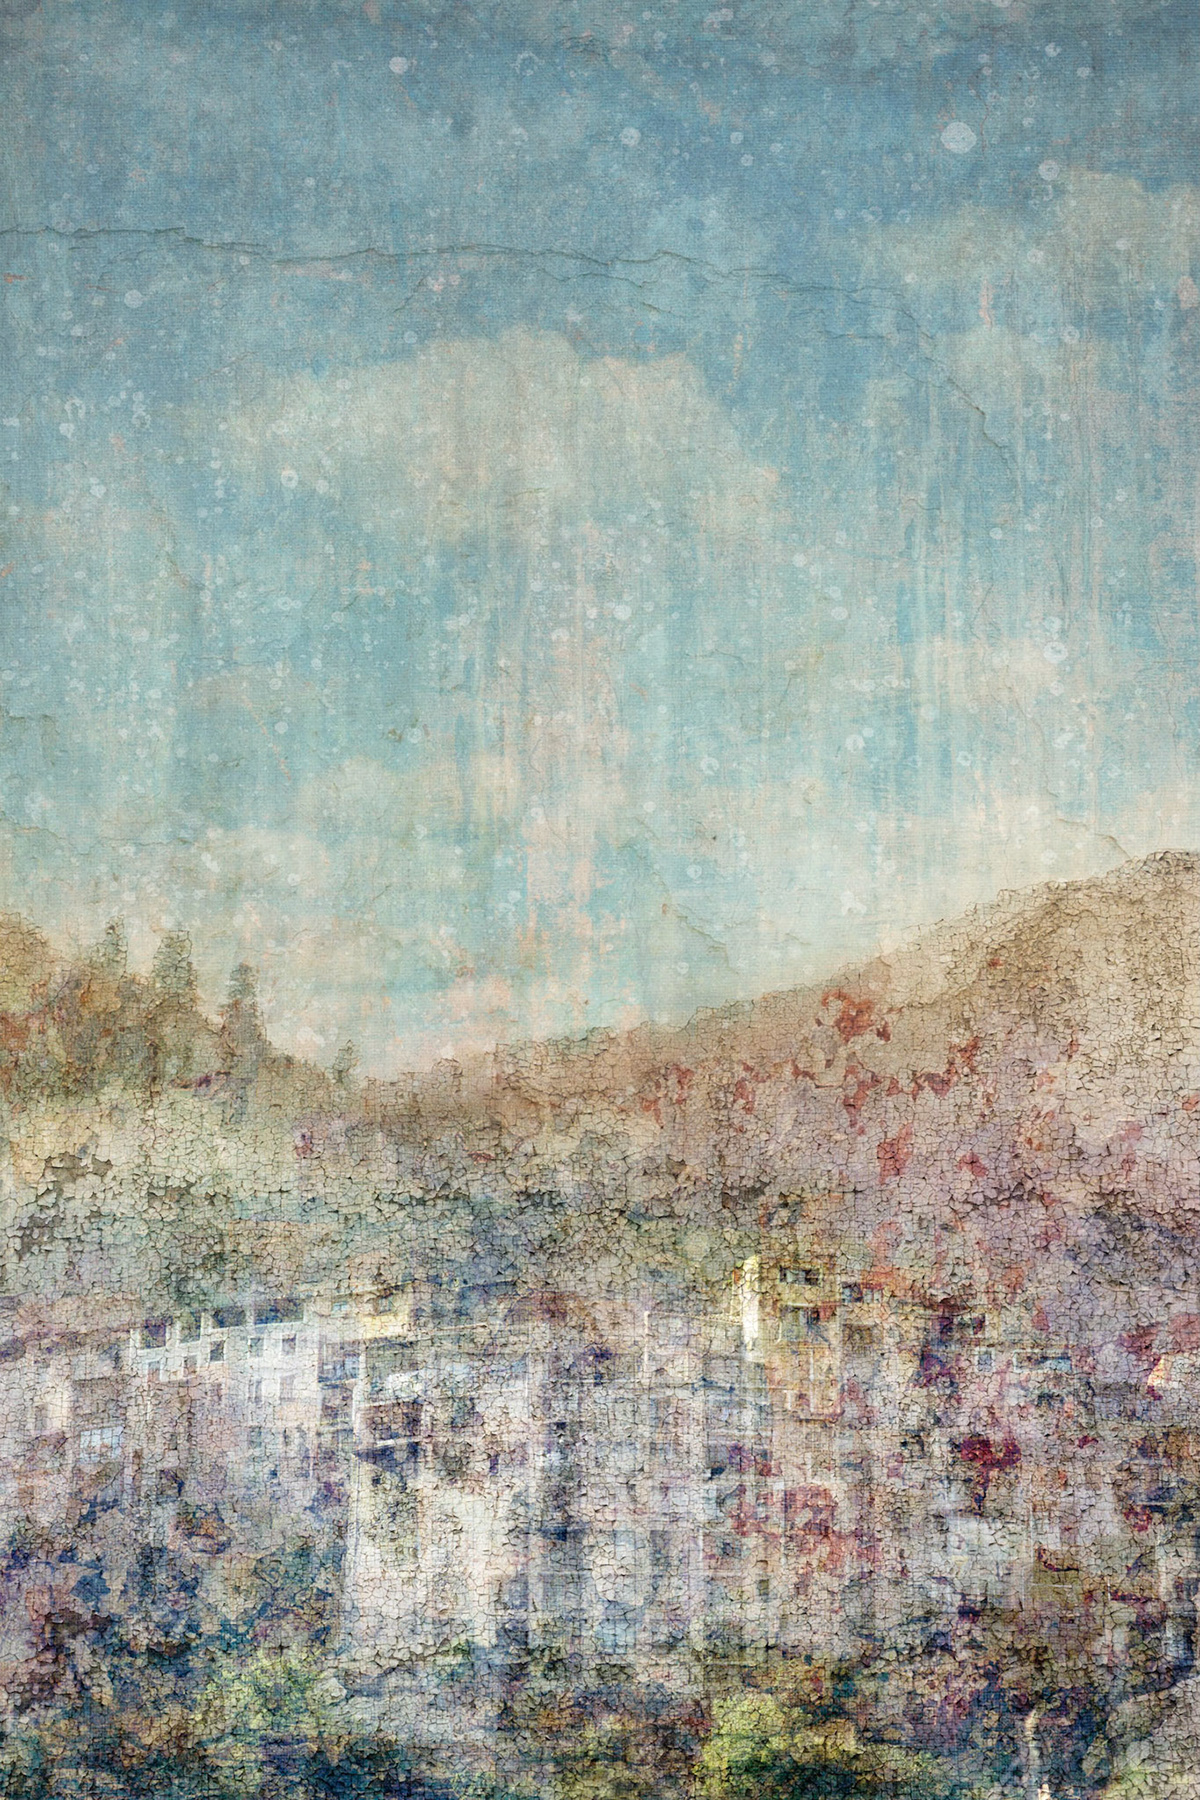 Emergent Landscape No. 1, 2010, digital collage, 25" x 38"